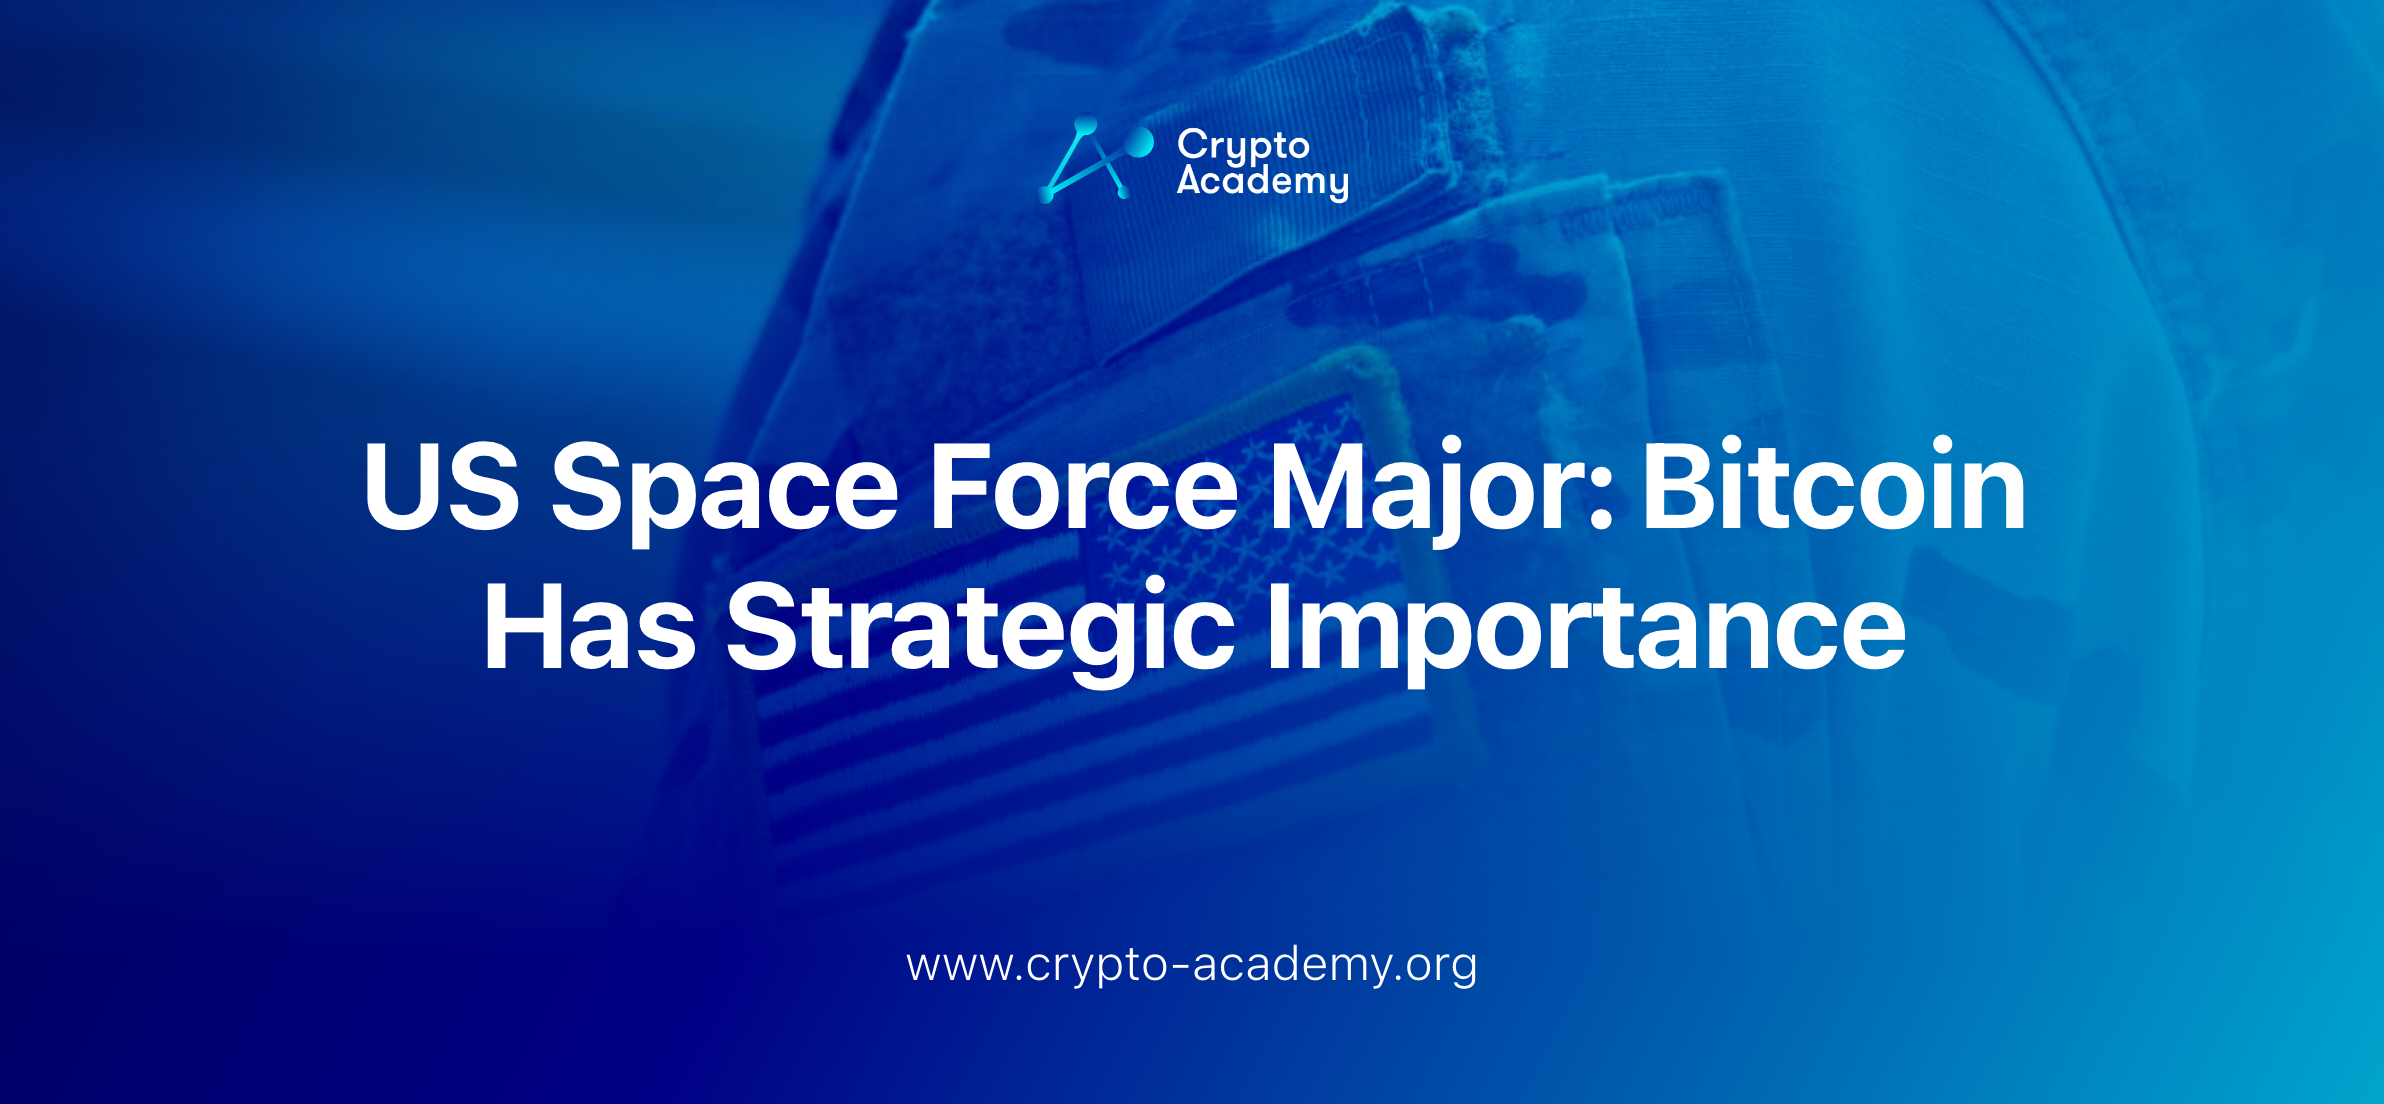 U.S. Space Force Major: Bitcoin Has Strategic Importance